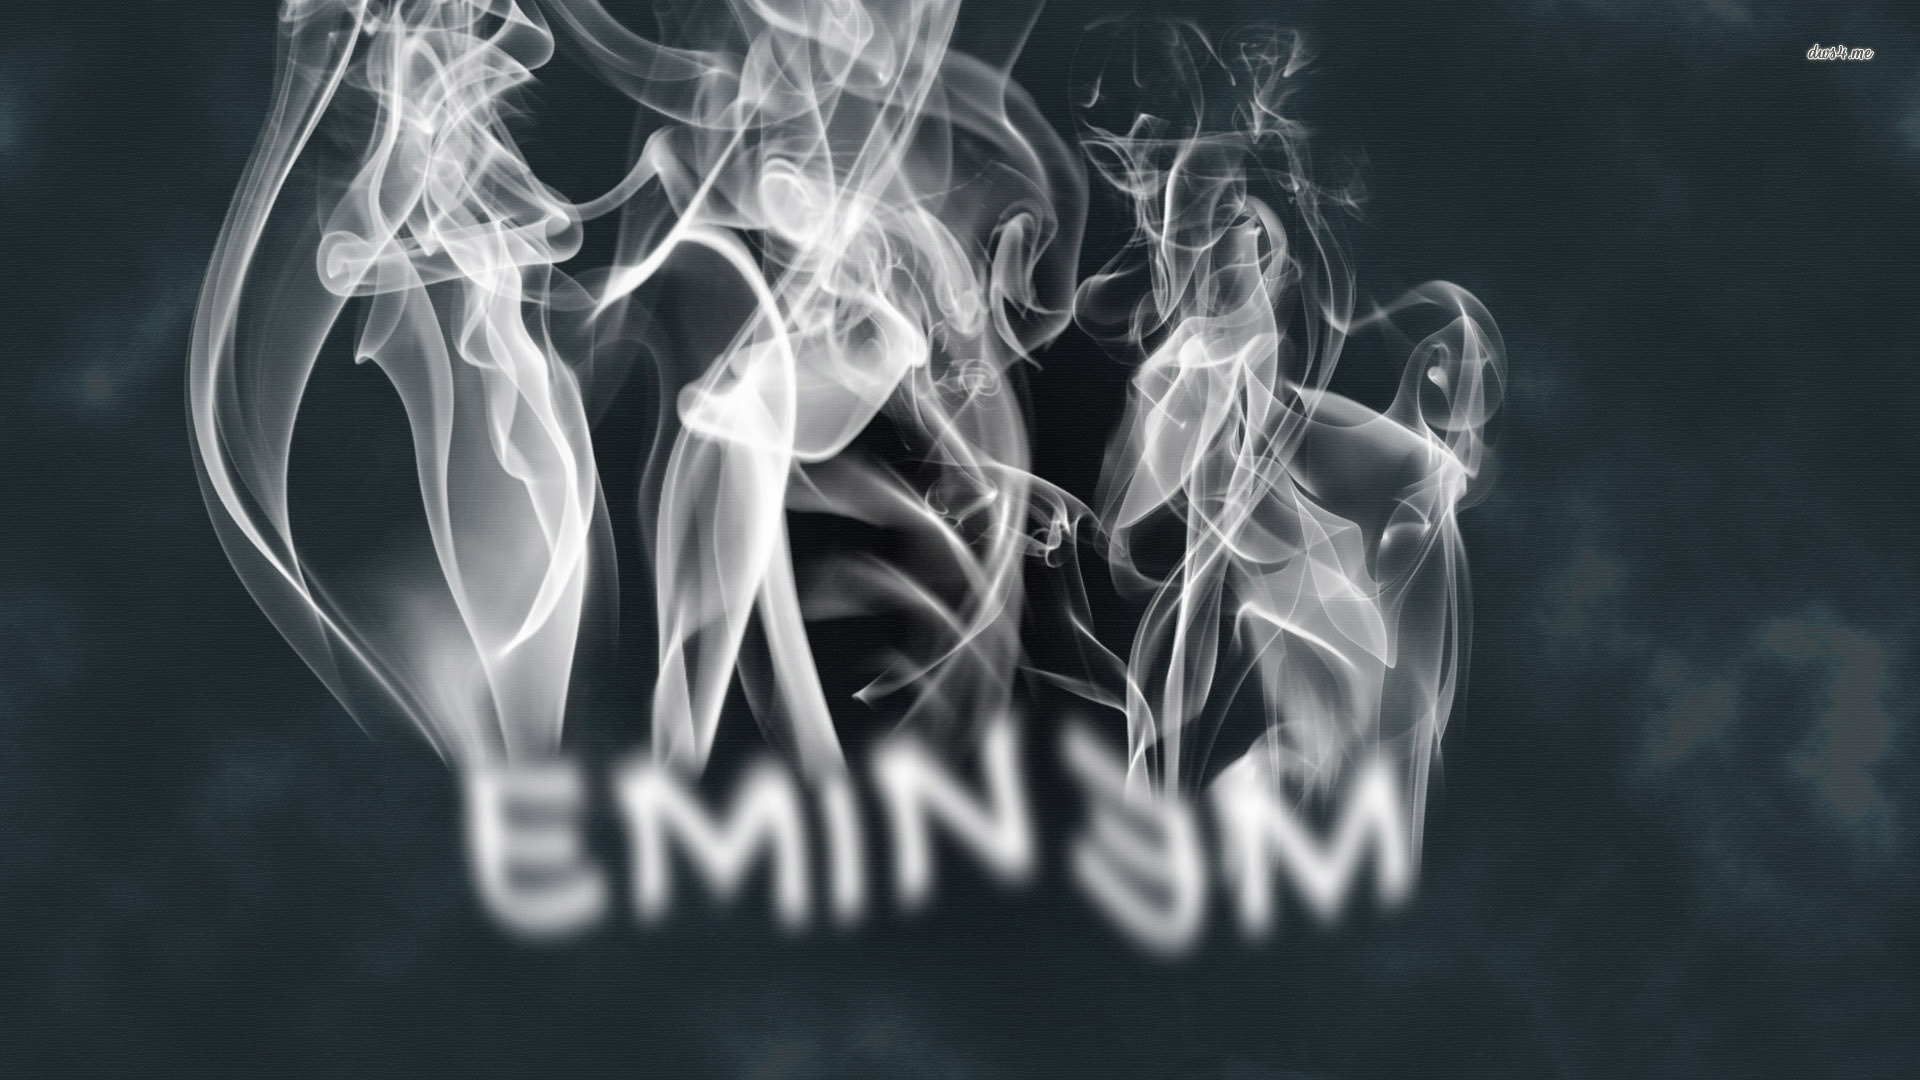 Eminem Wallpapers HD A18